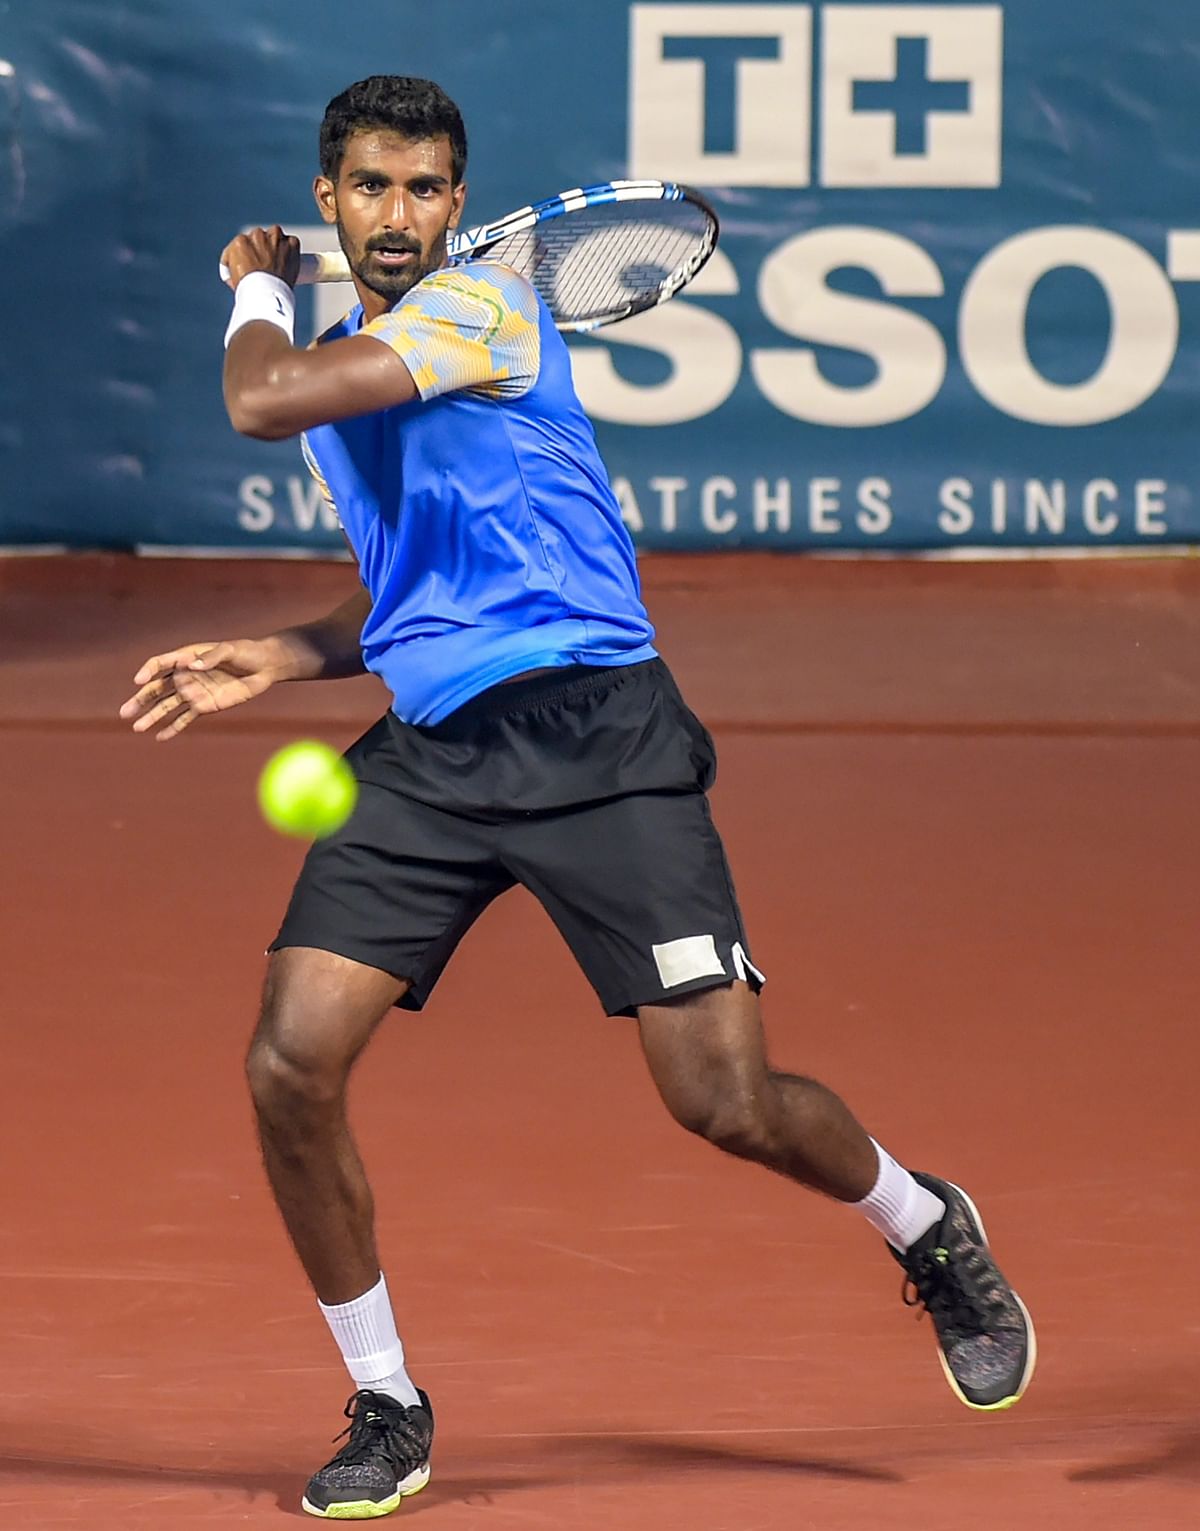 Indian singles tennis player Prajnesh Gunneswaran has booked a spot in the main draw of the Australian Open.